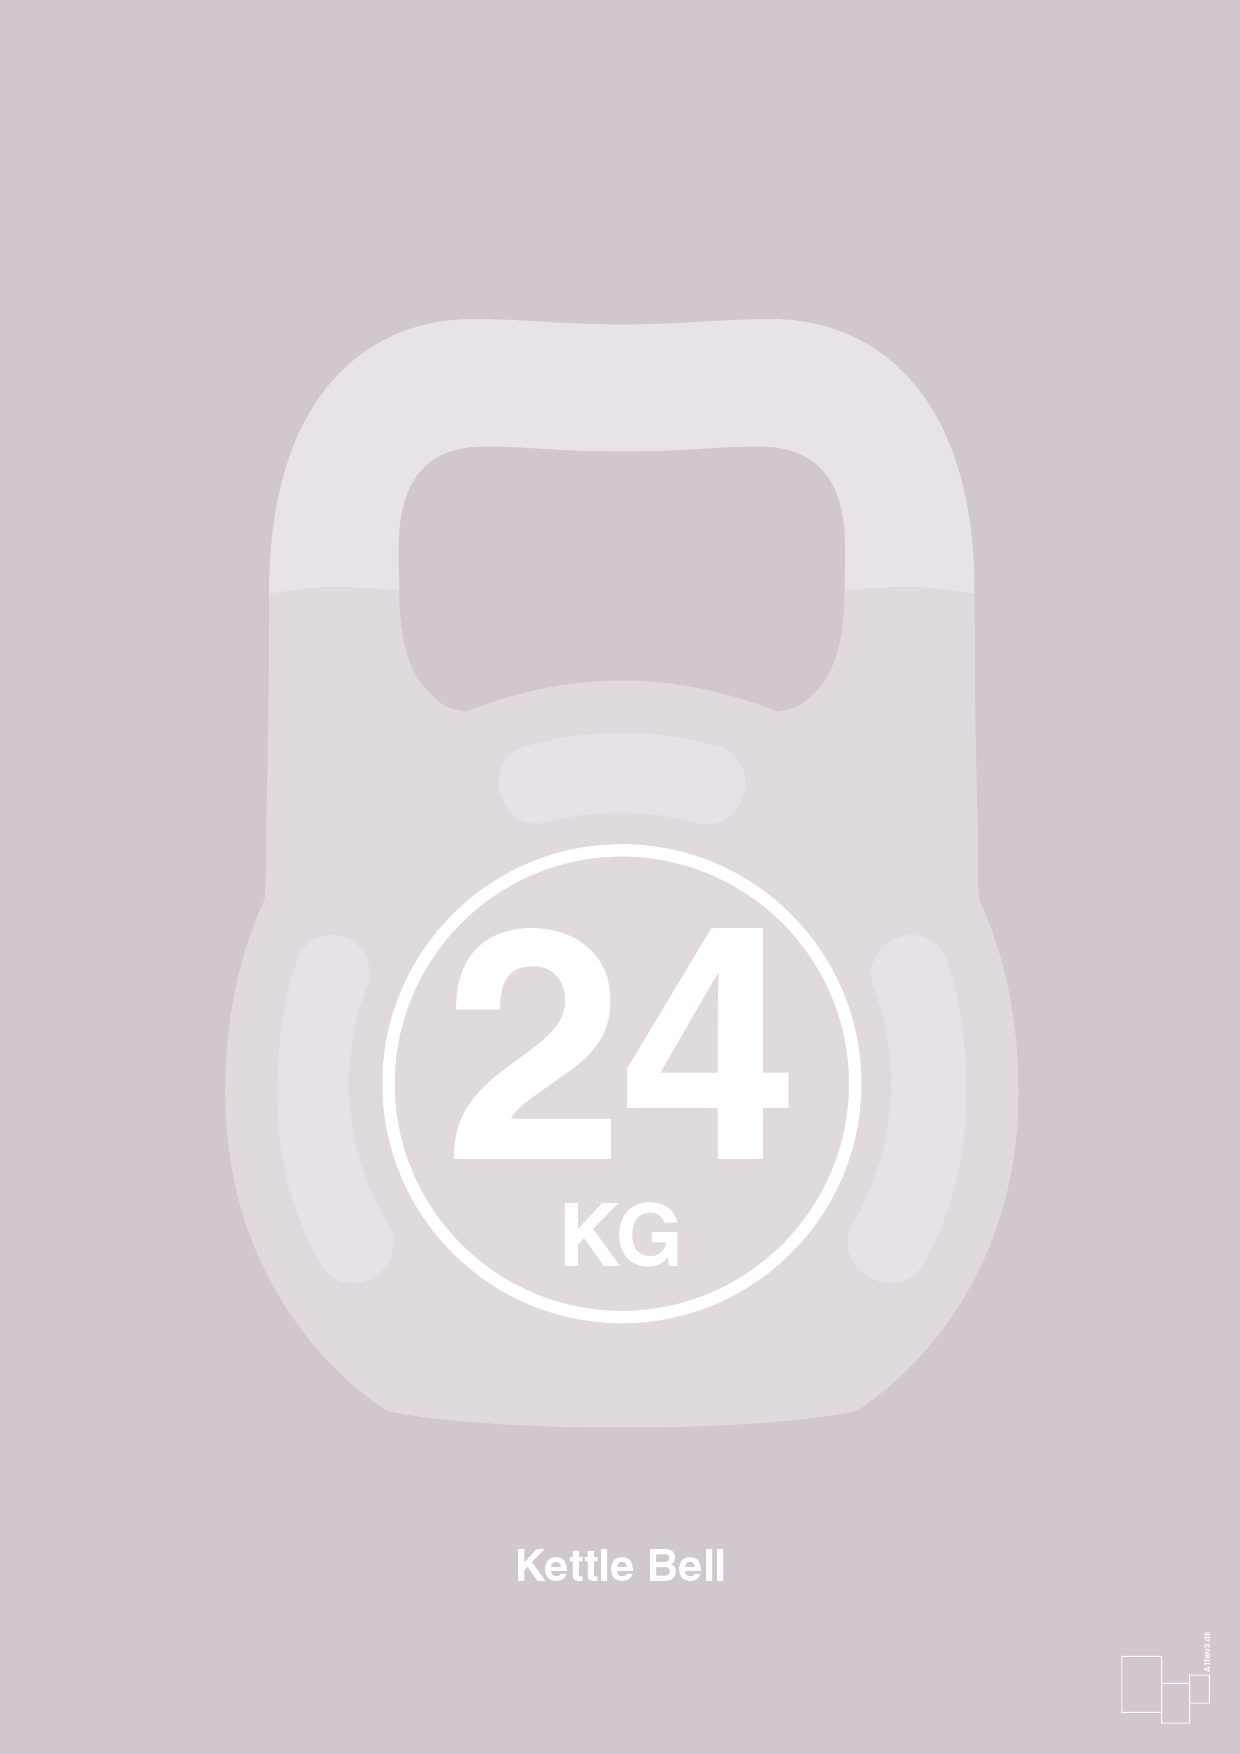 kettle bell 24 kg - Plakat med Grafik i Dusty Lilac